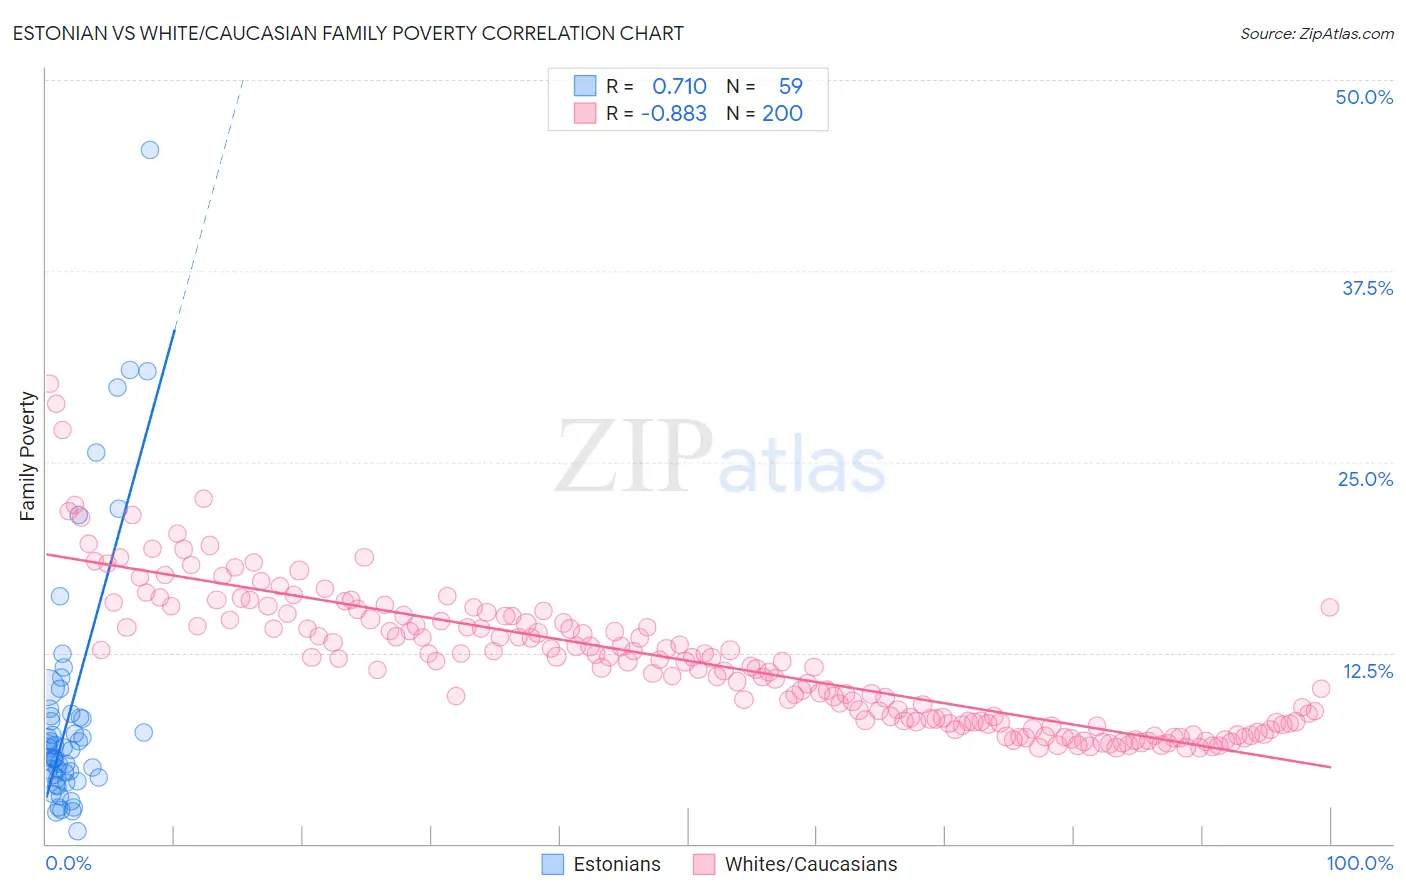 Estonian vs White/Caucasian Family Poverty